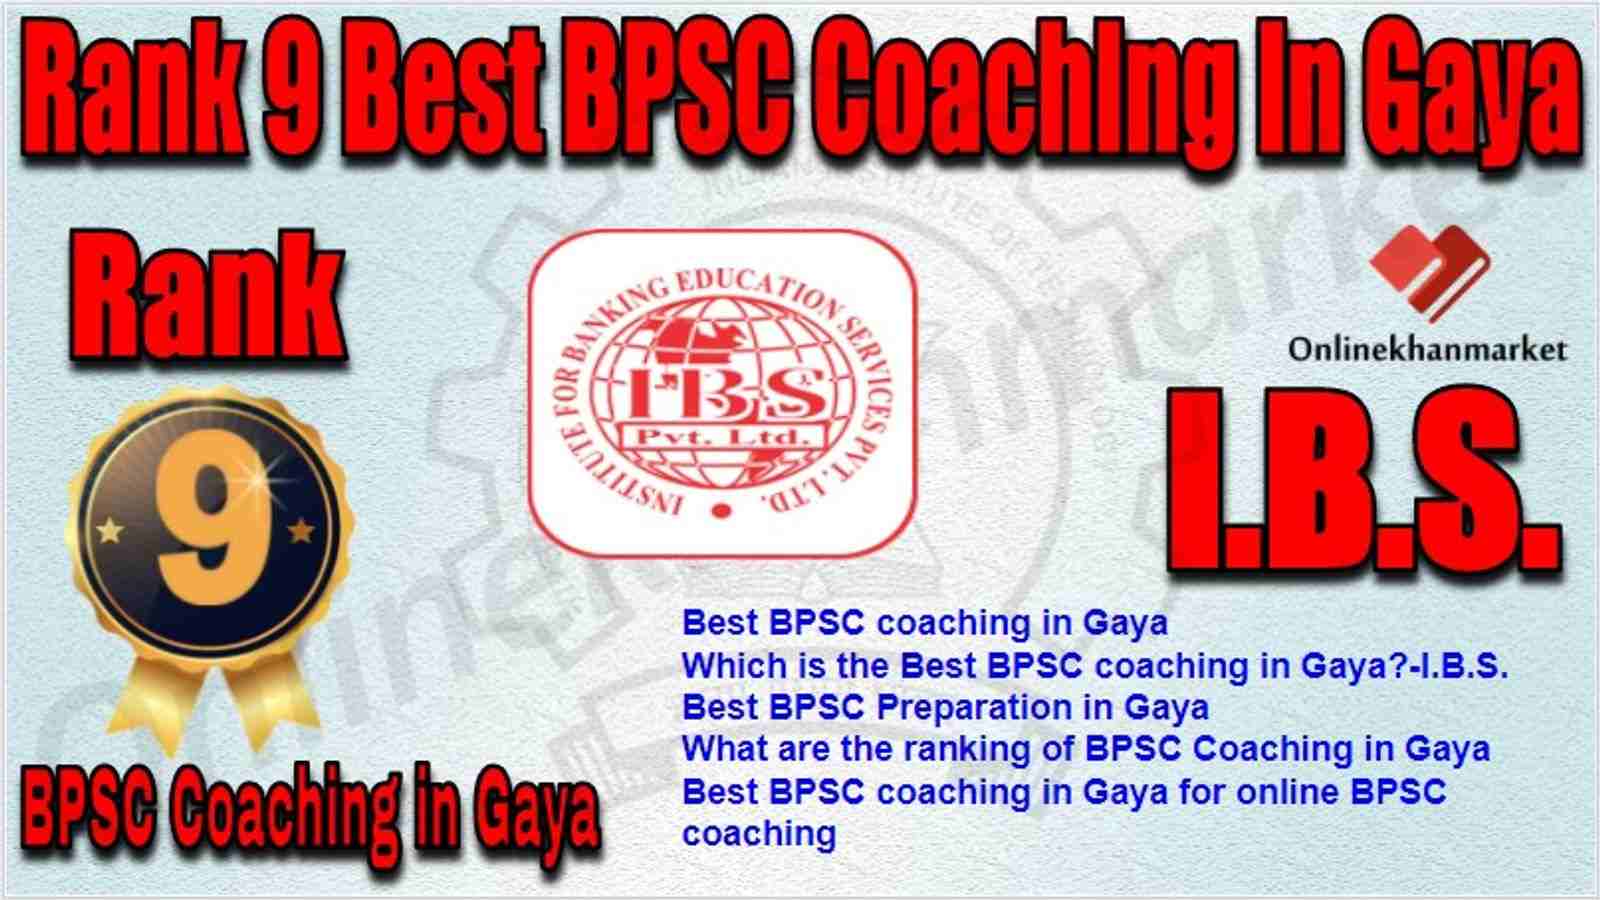 Rank 9 Best BPSC Coaching in gaya